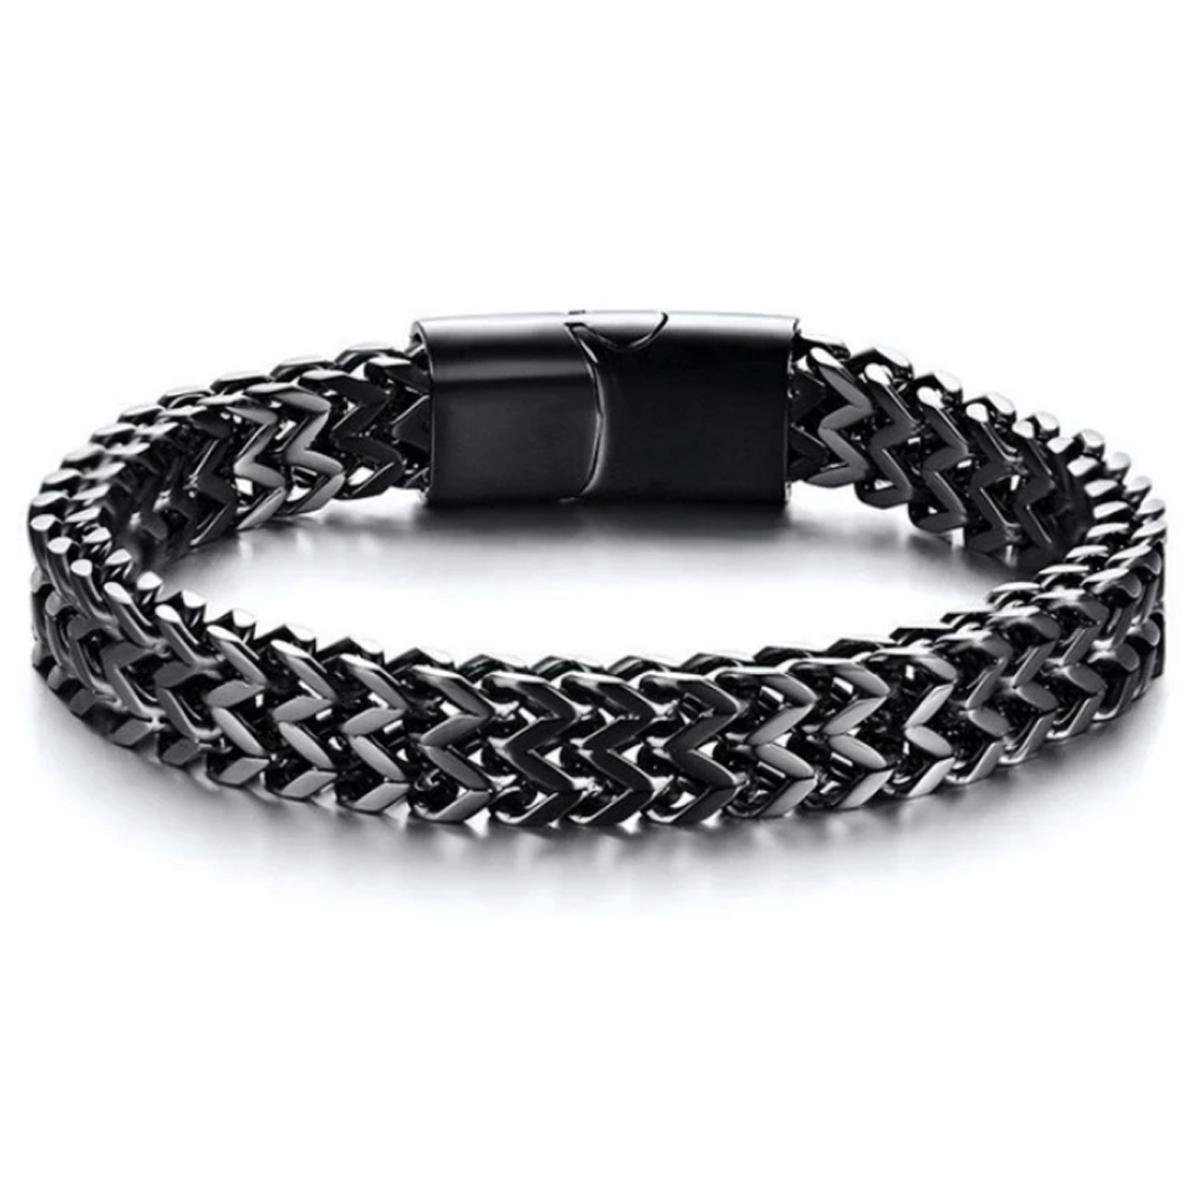 Victorious Zwart Stalen Armband Heren – Dunne Armband met Magnetische Schuifsluiting – Zwart – 19.5cm